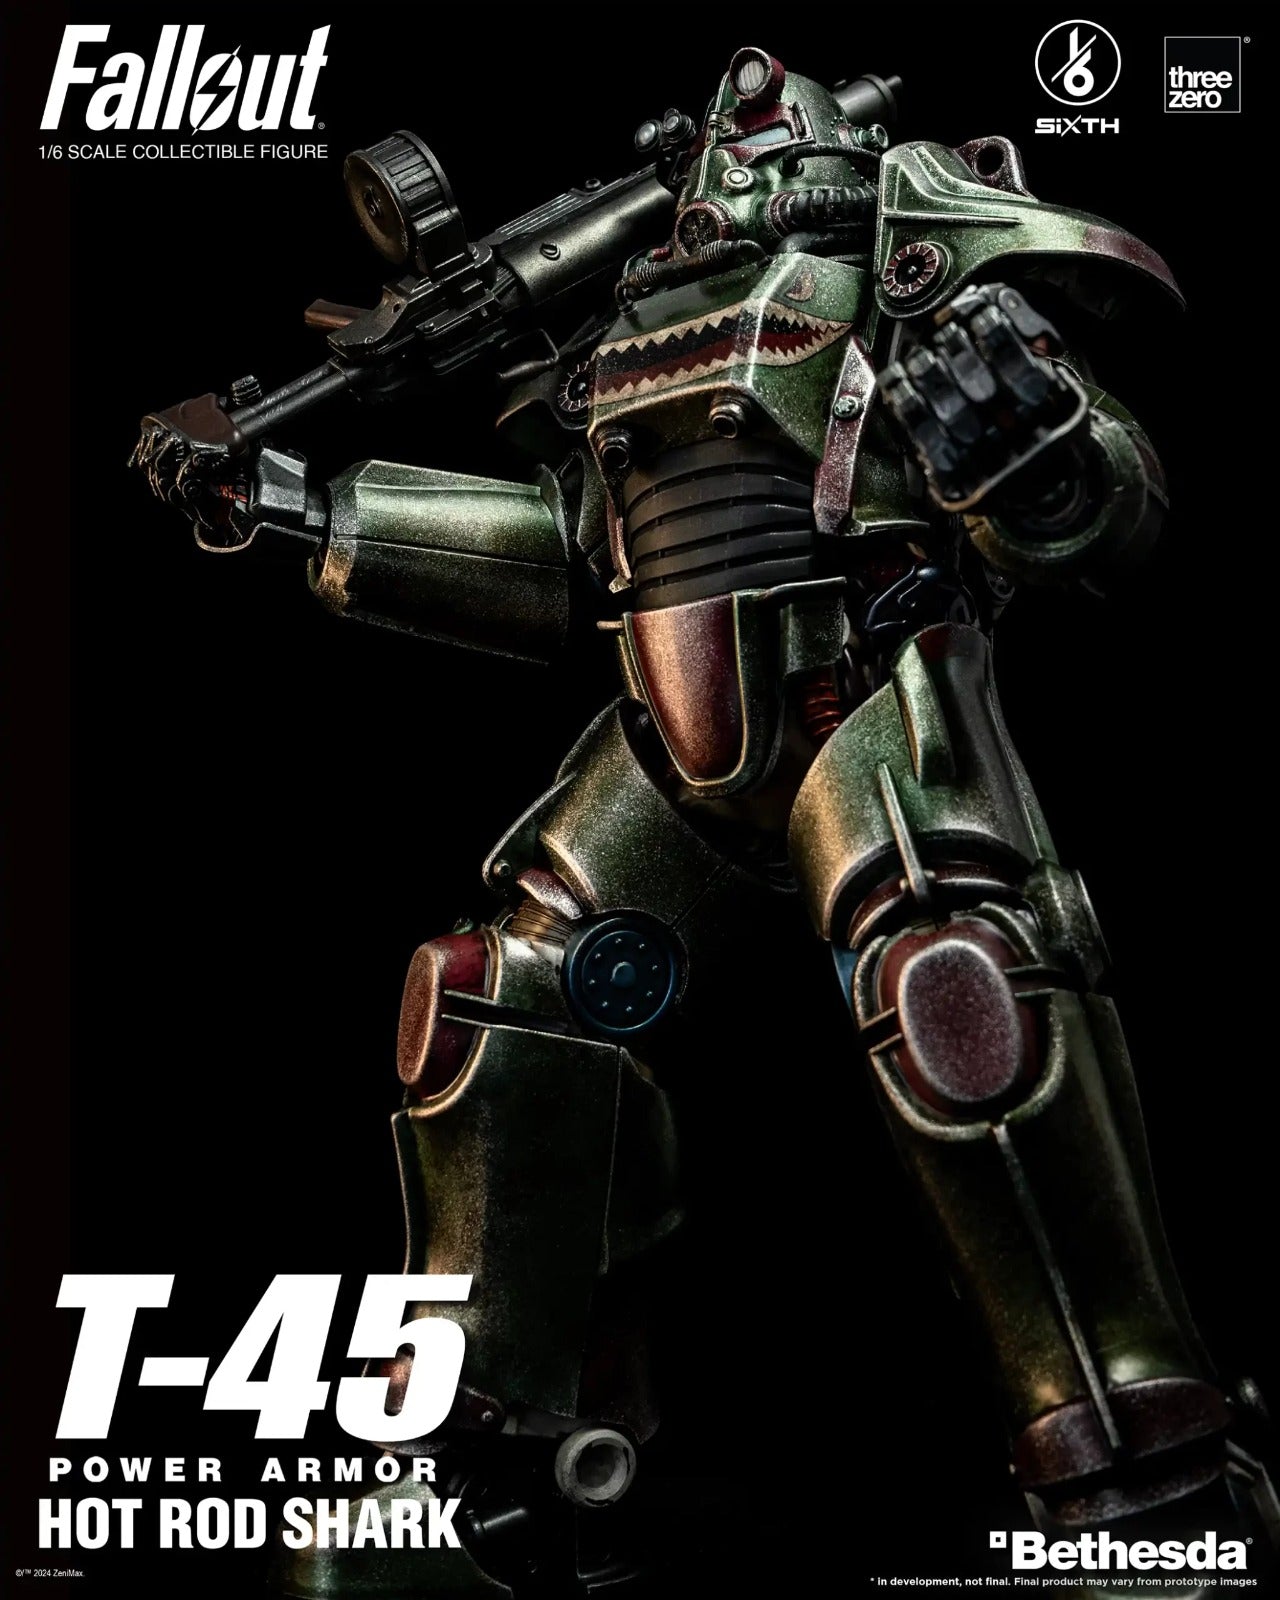 Preventa Figura T-45 Hot Rod Shark Power Armor - FALLOUT marca Threezero 3Z0774 escala 1/6